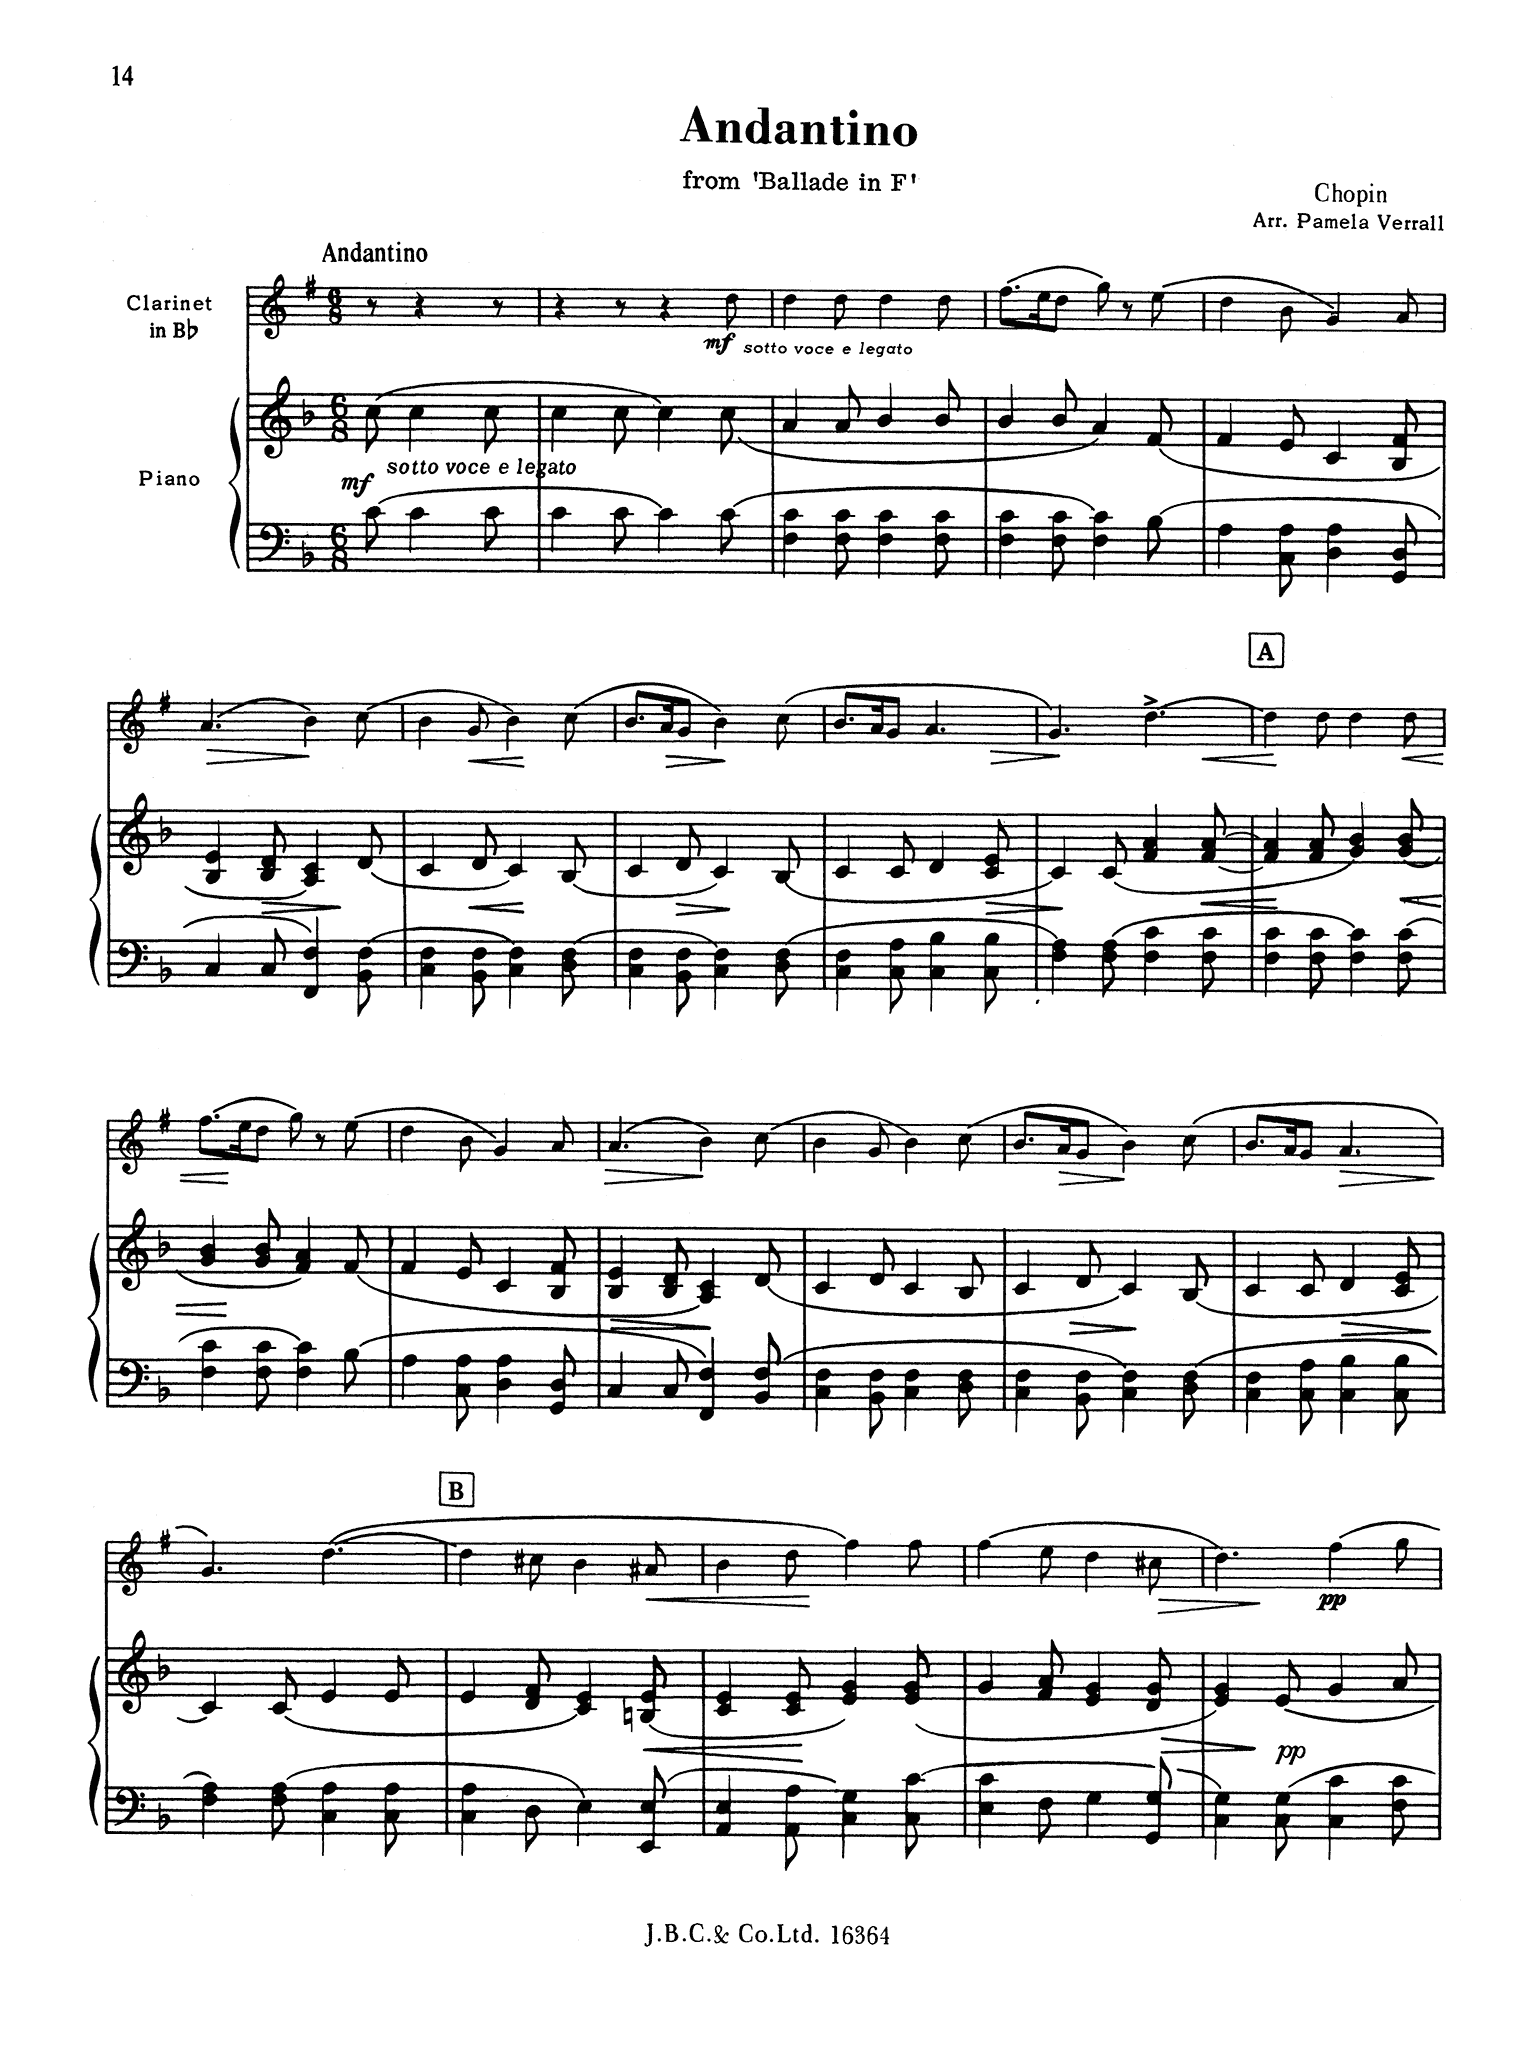 Chopin Ballade No. 2 in F Major clarinet and piano arrangement